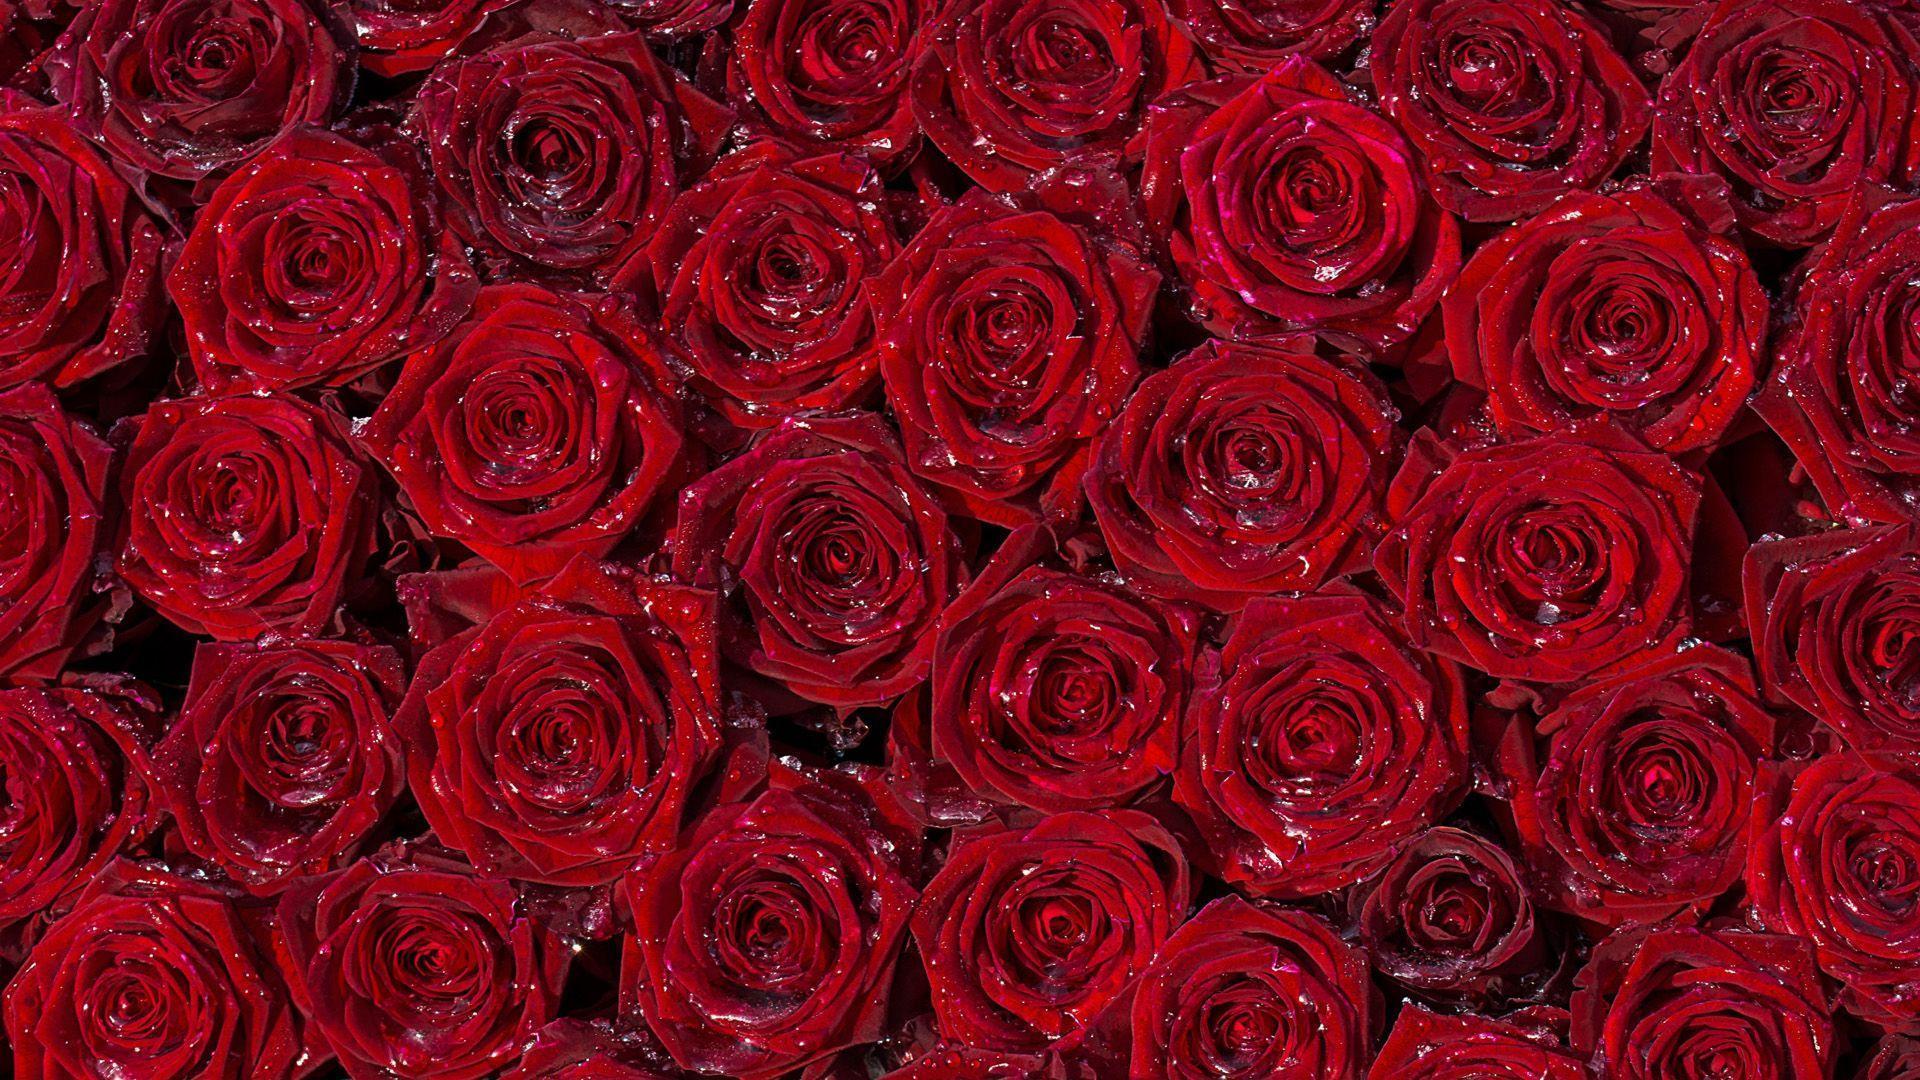 Rose HD full screen 3 wallpaper, Rose Flower image, Rose Picture